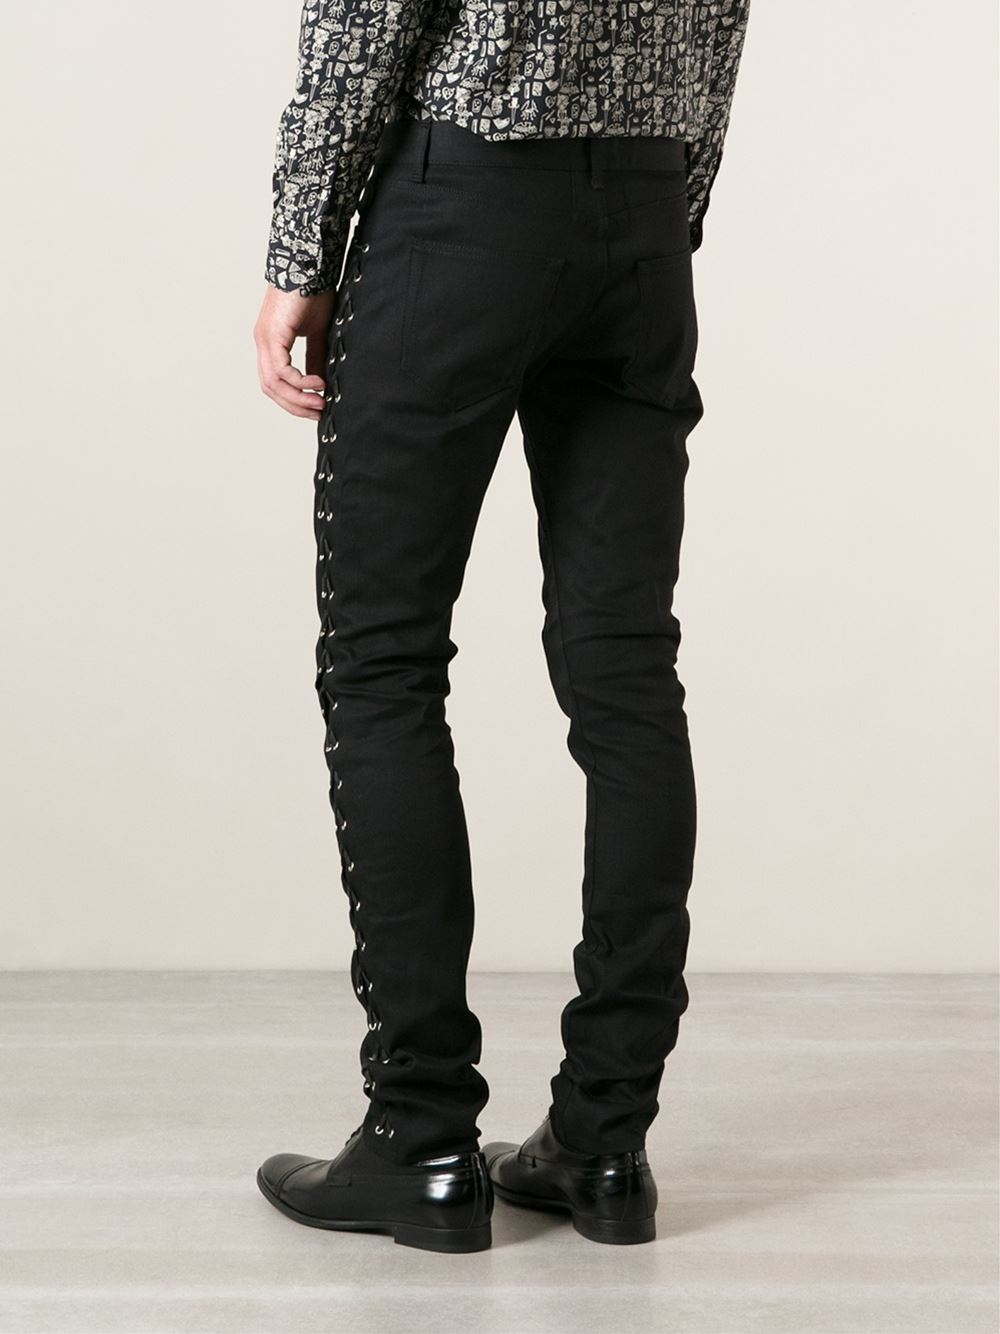 Lyst - Saint Laurent Lace-Up Detail Skinny Jeans in Black for Men